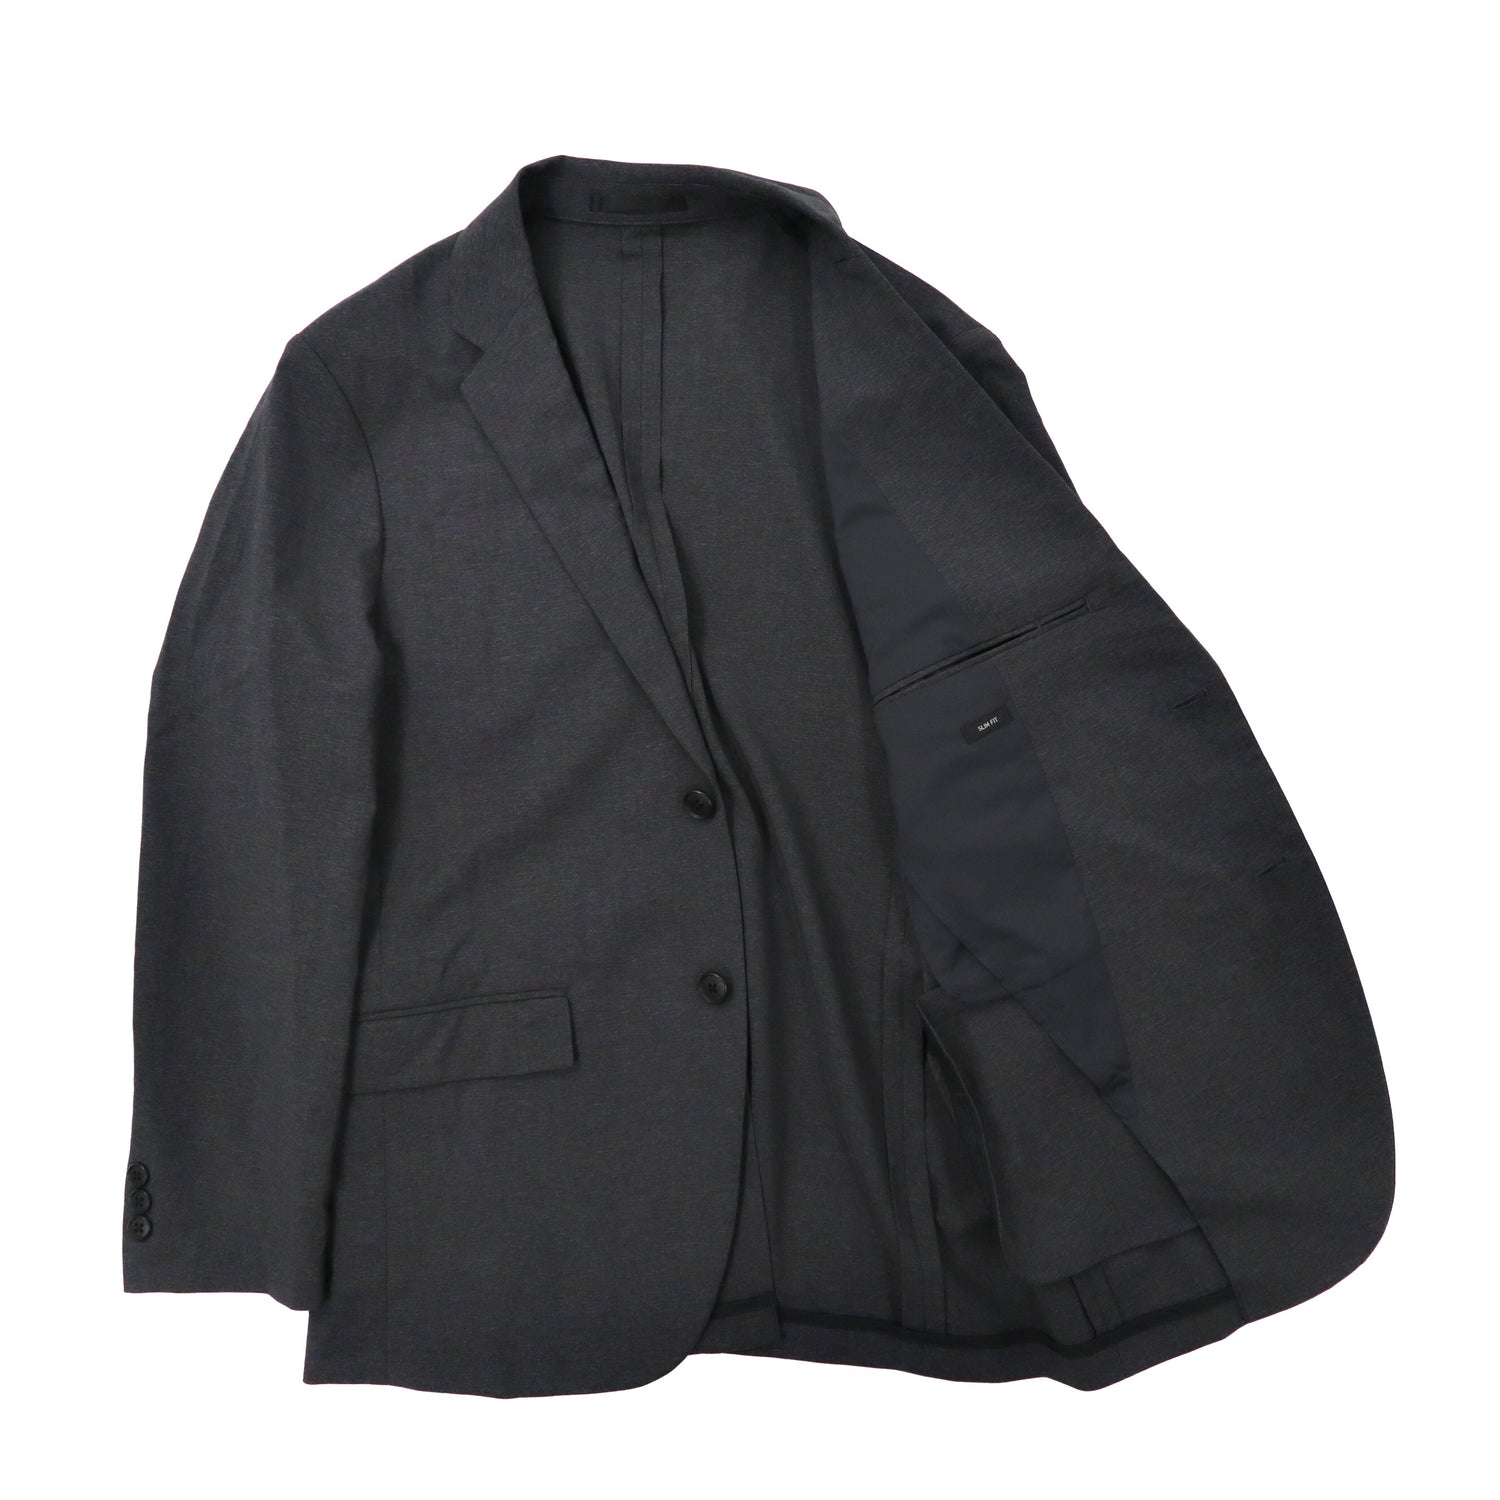 UNIQLO jacket setup suit S Gray polyester Slim Fit 311-426858